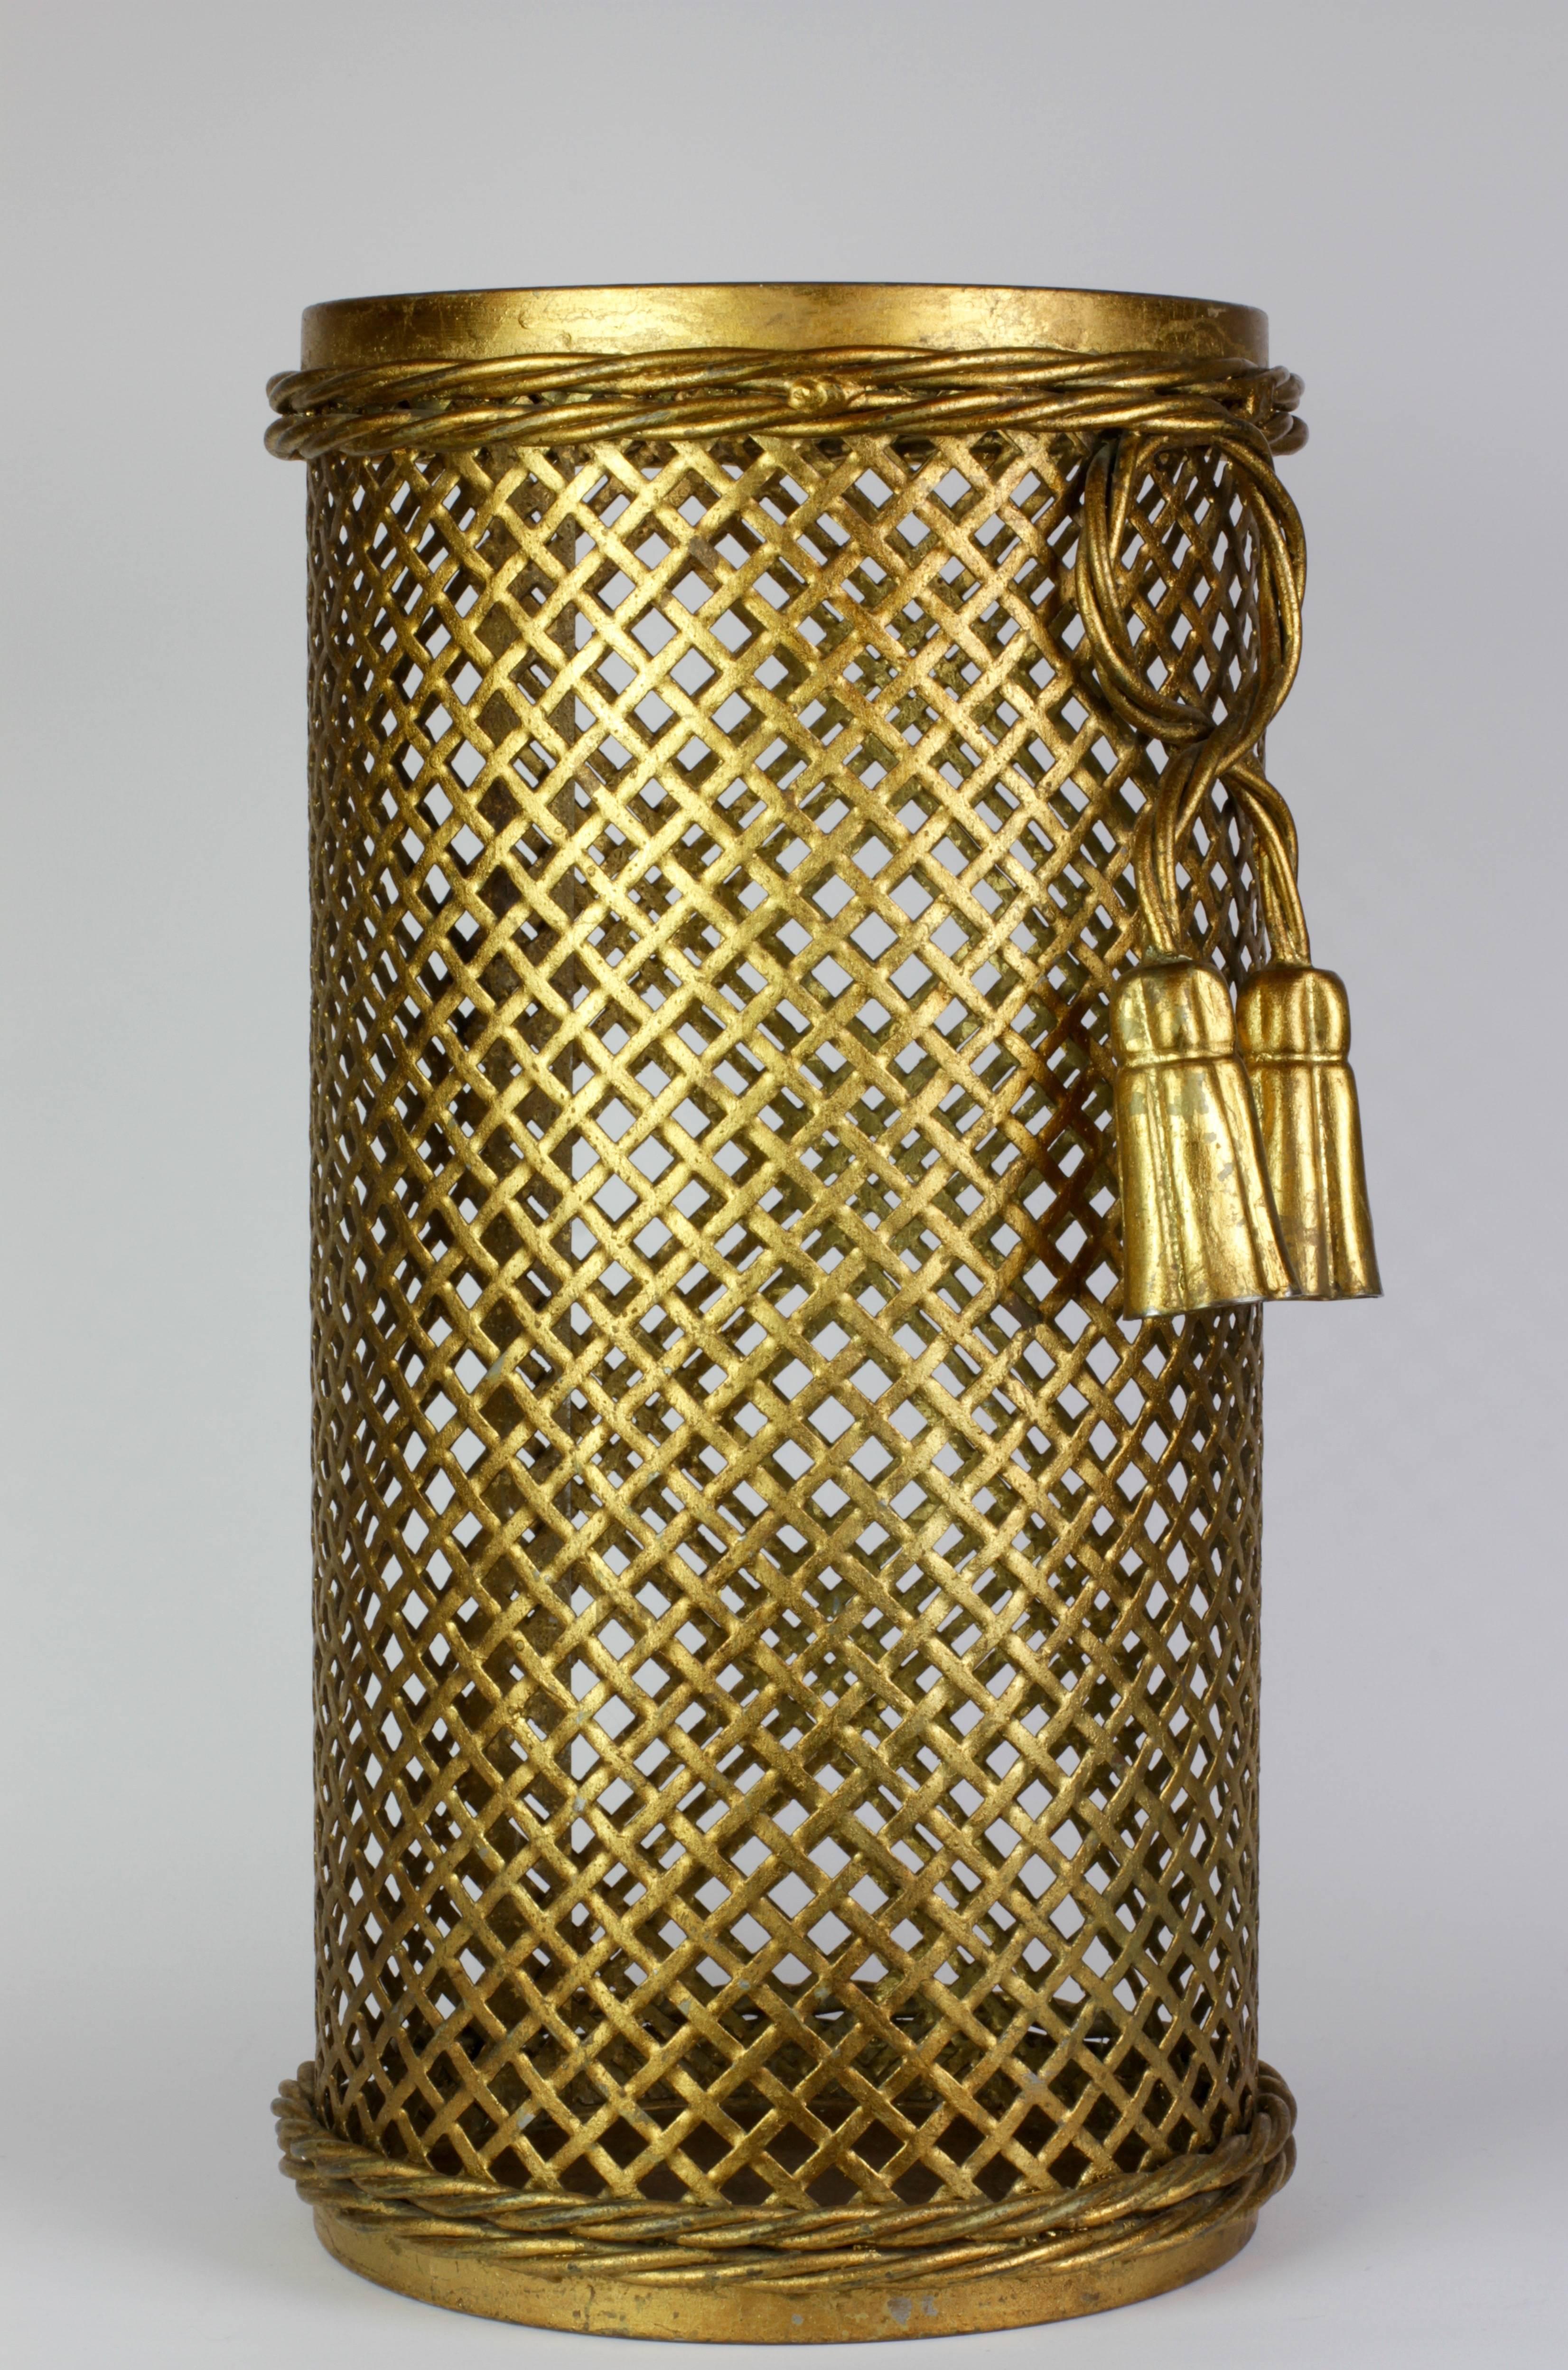 1950s Italian Hollywood Regency Gold Gilded Umbrella Stand or Waste Paper Basket 1